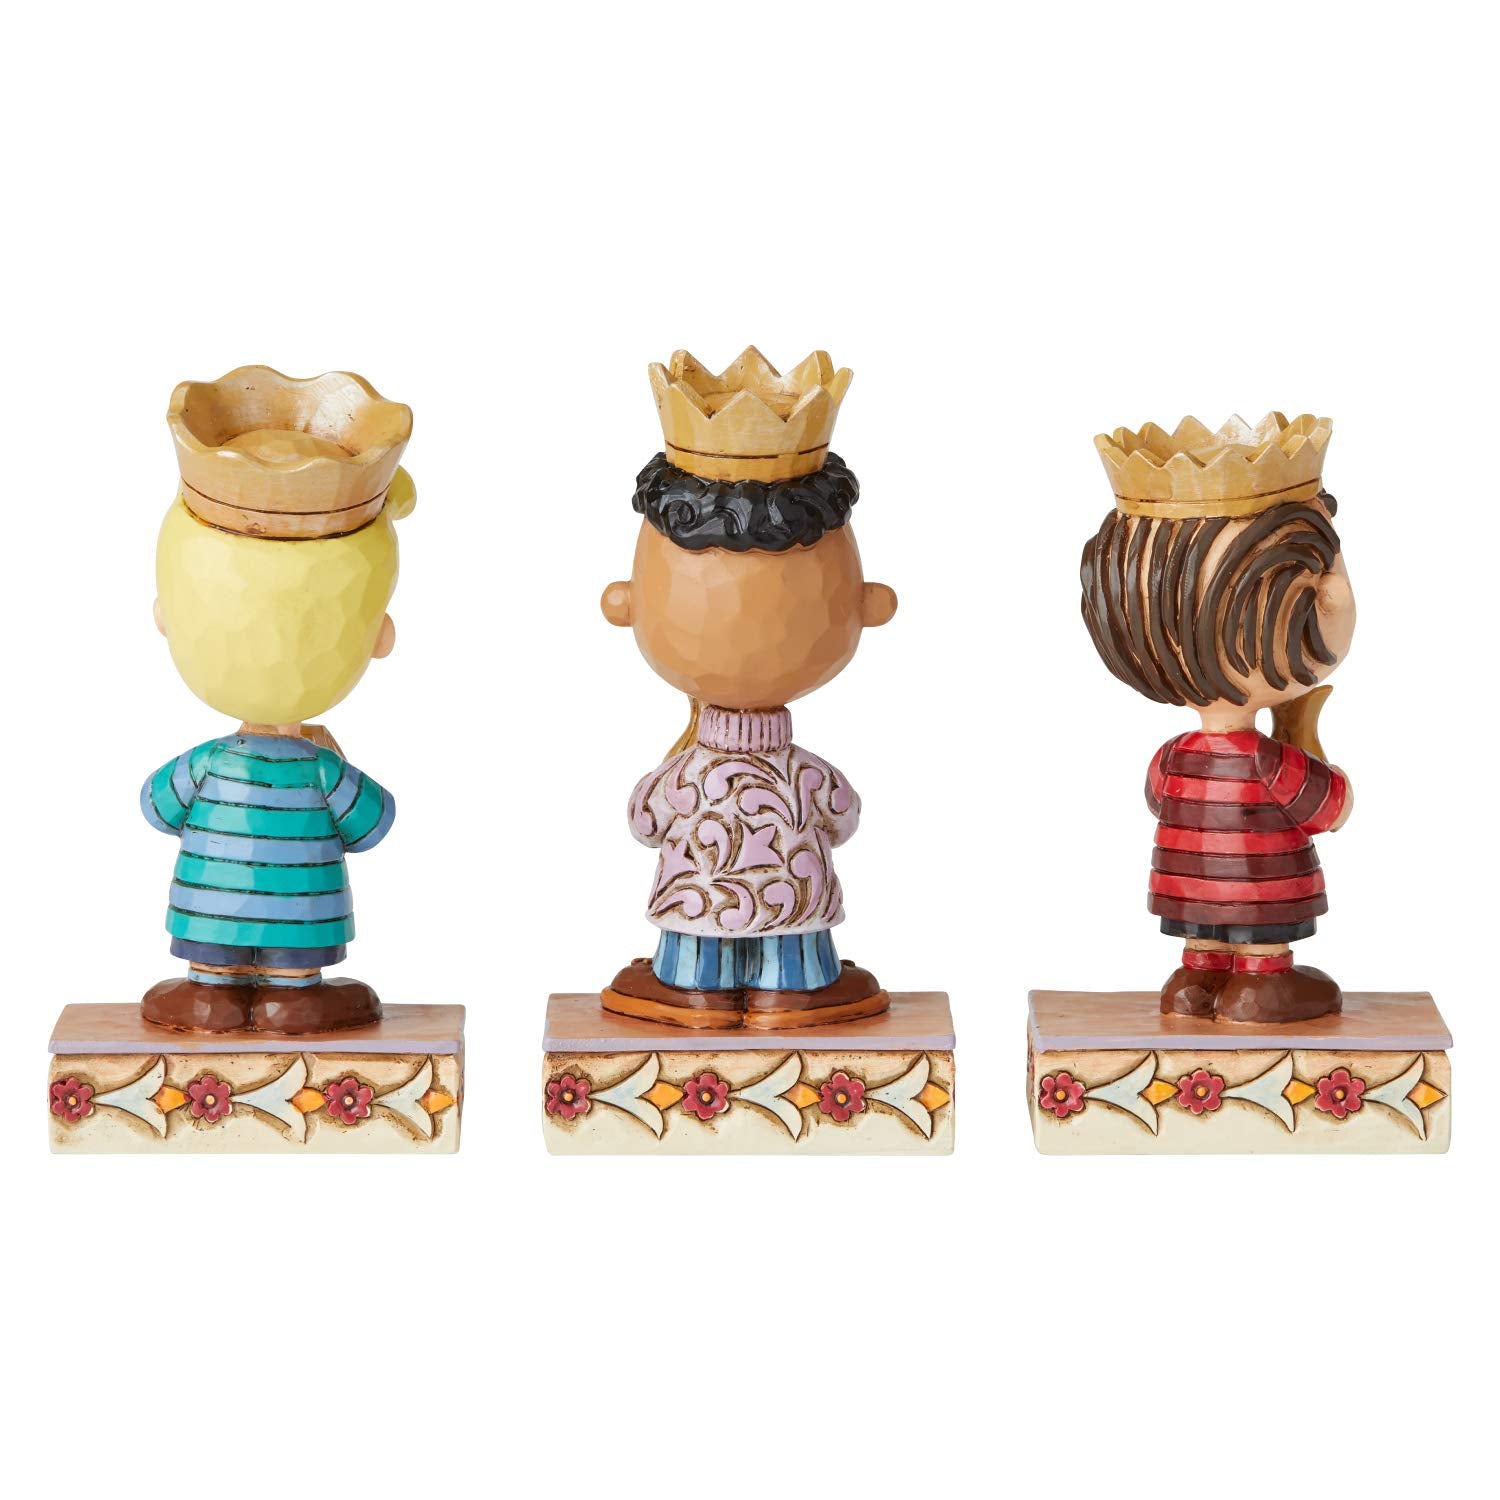 Enesco Peanuts by Jim Shore Christmas Pageant Three Wise Men Figurine Set, 4 Inch, Multicolor,6004973